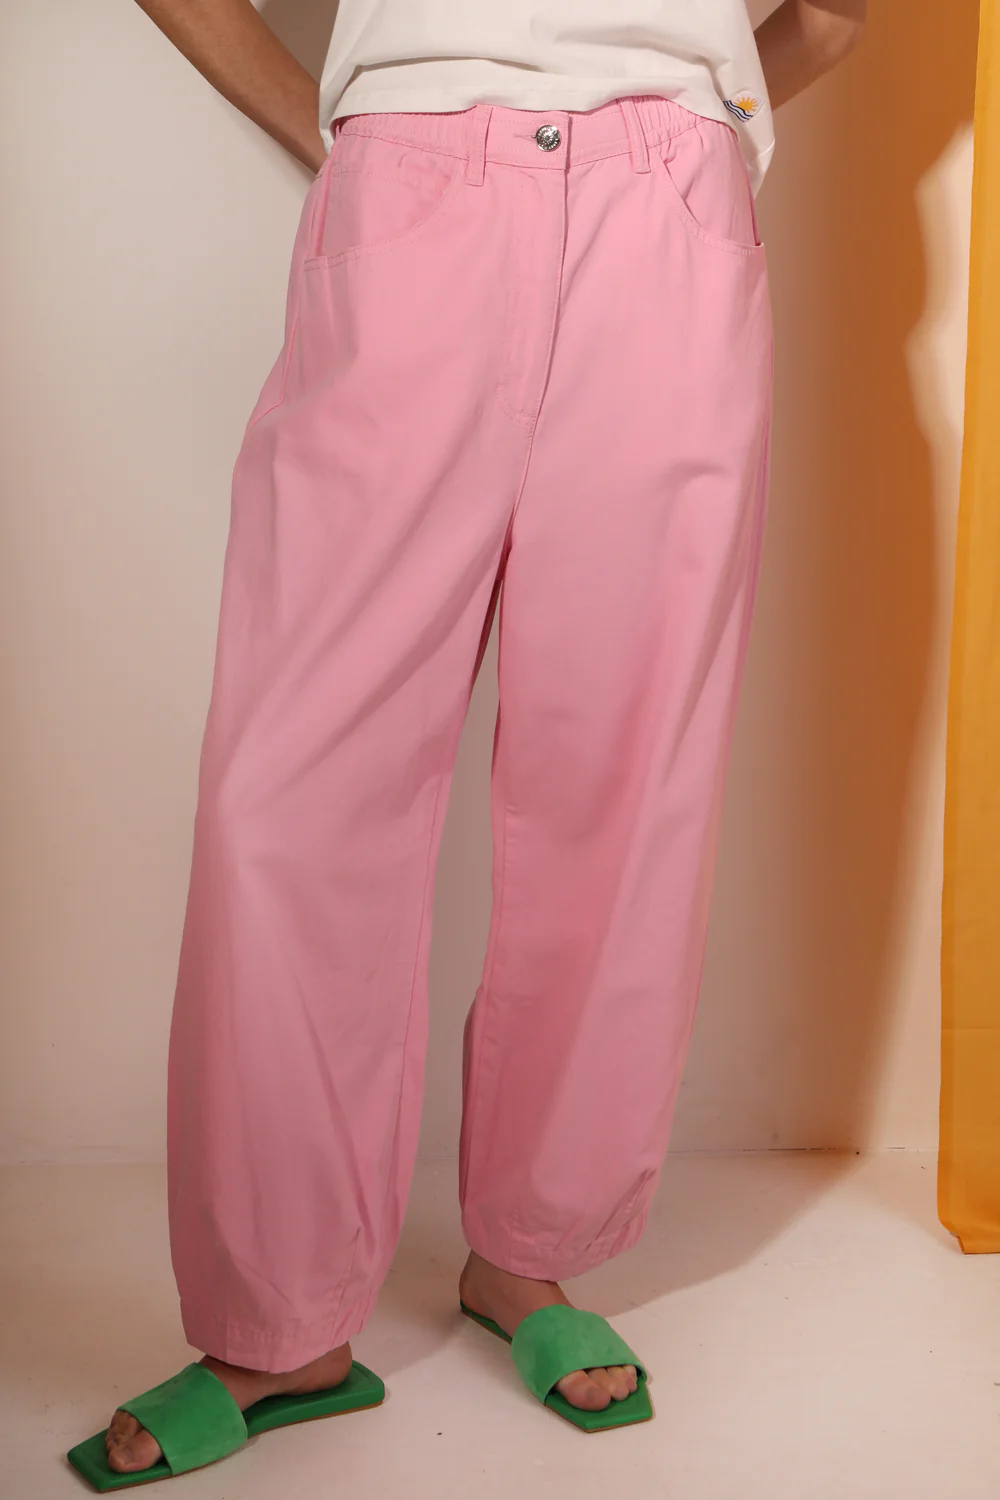 LF Markey Fergus Trousers Bright Pink